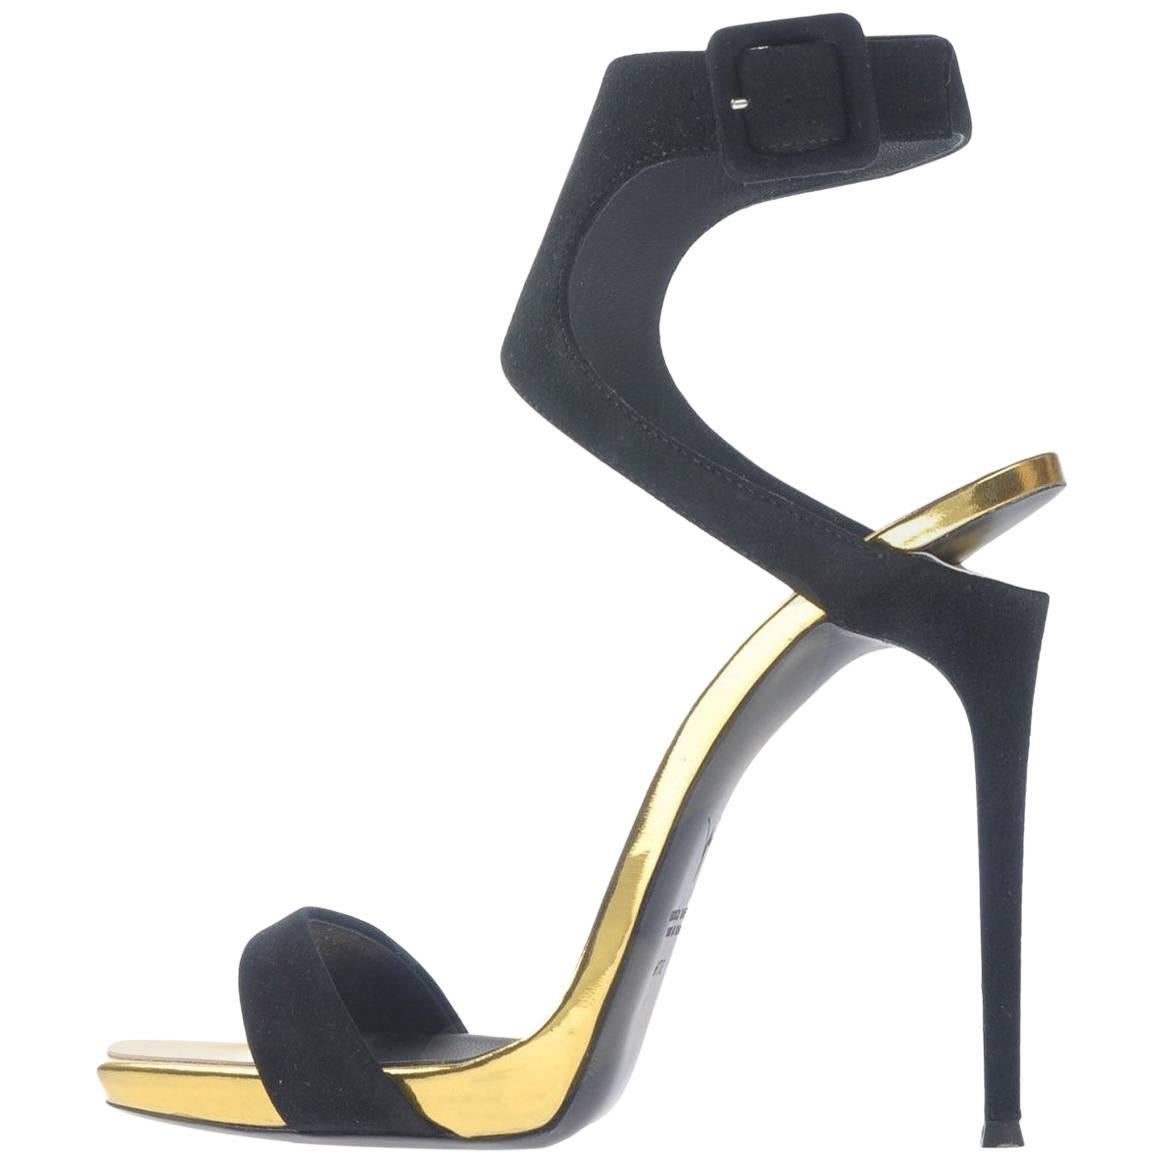 Giuseppe Zanotti New Black Suede Gold Evening Sandals Heels in Box